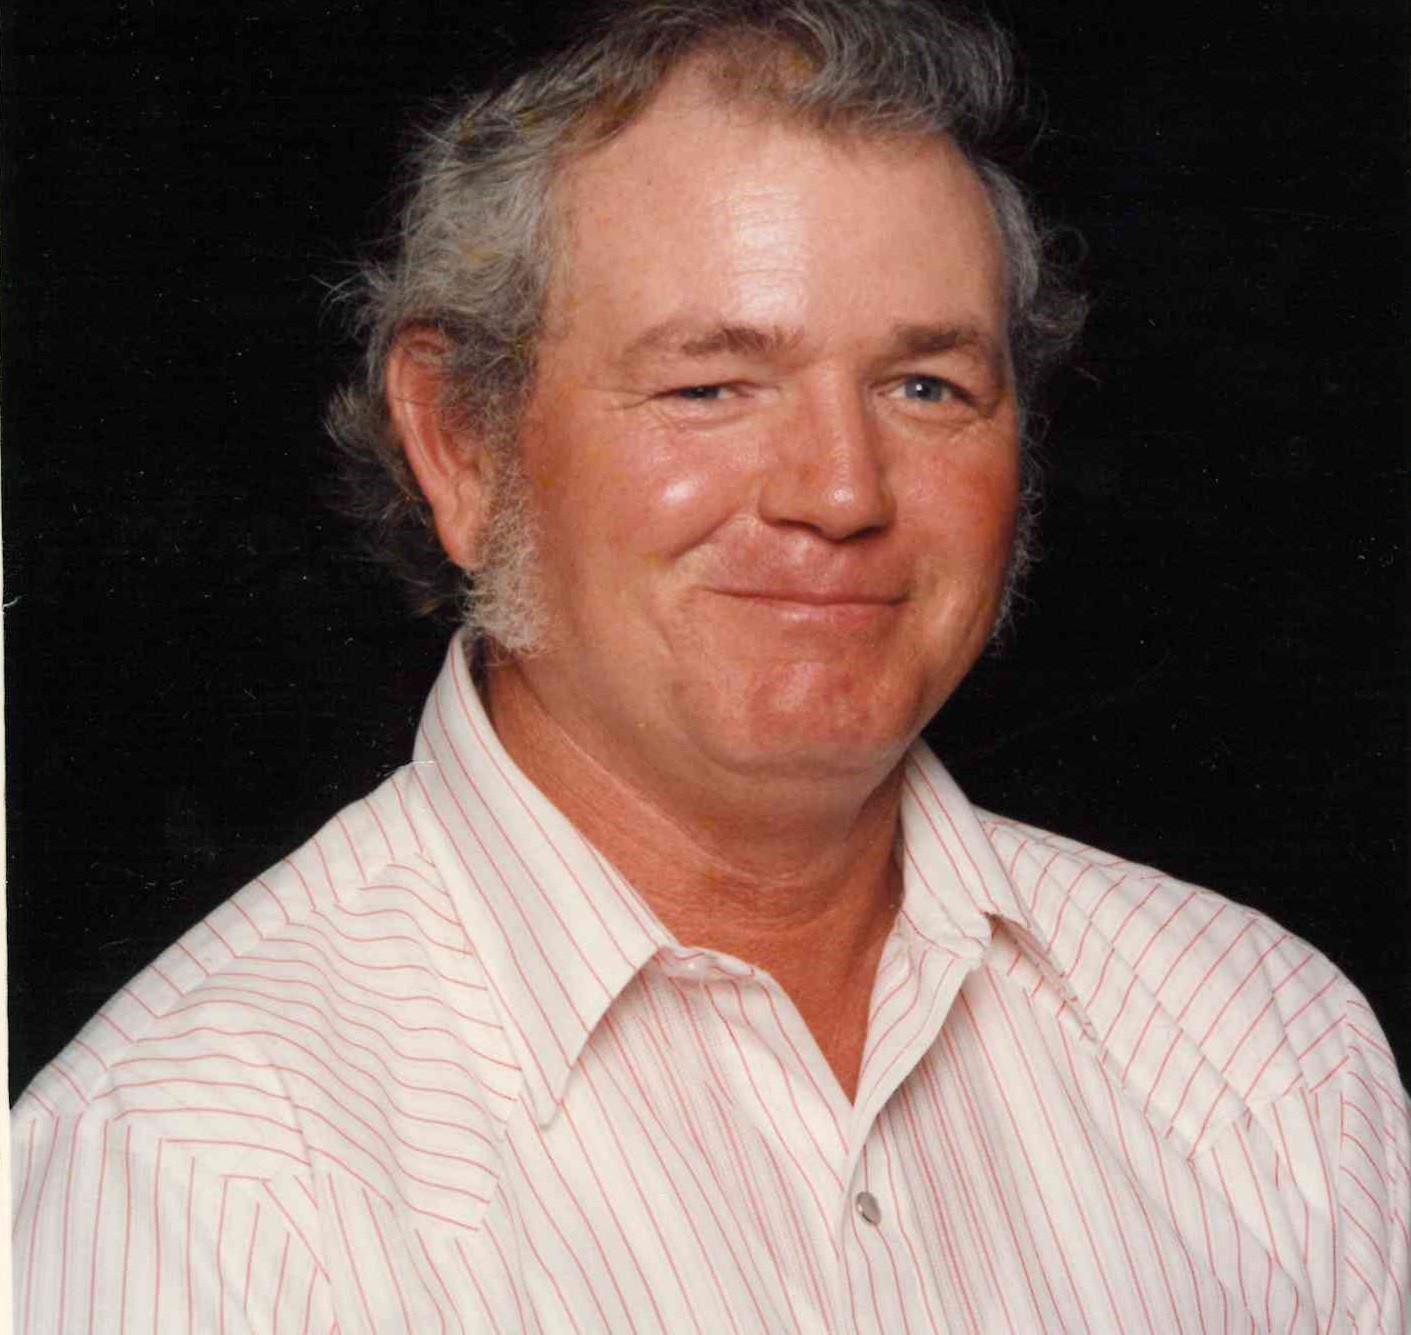 Obituary for “Bill” William Don Hooten